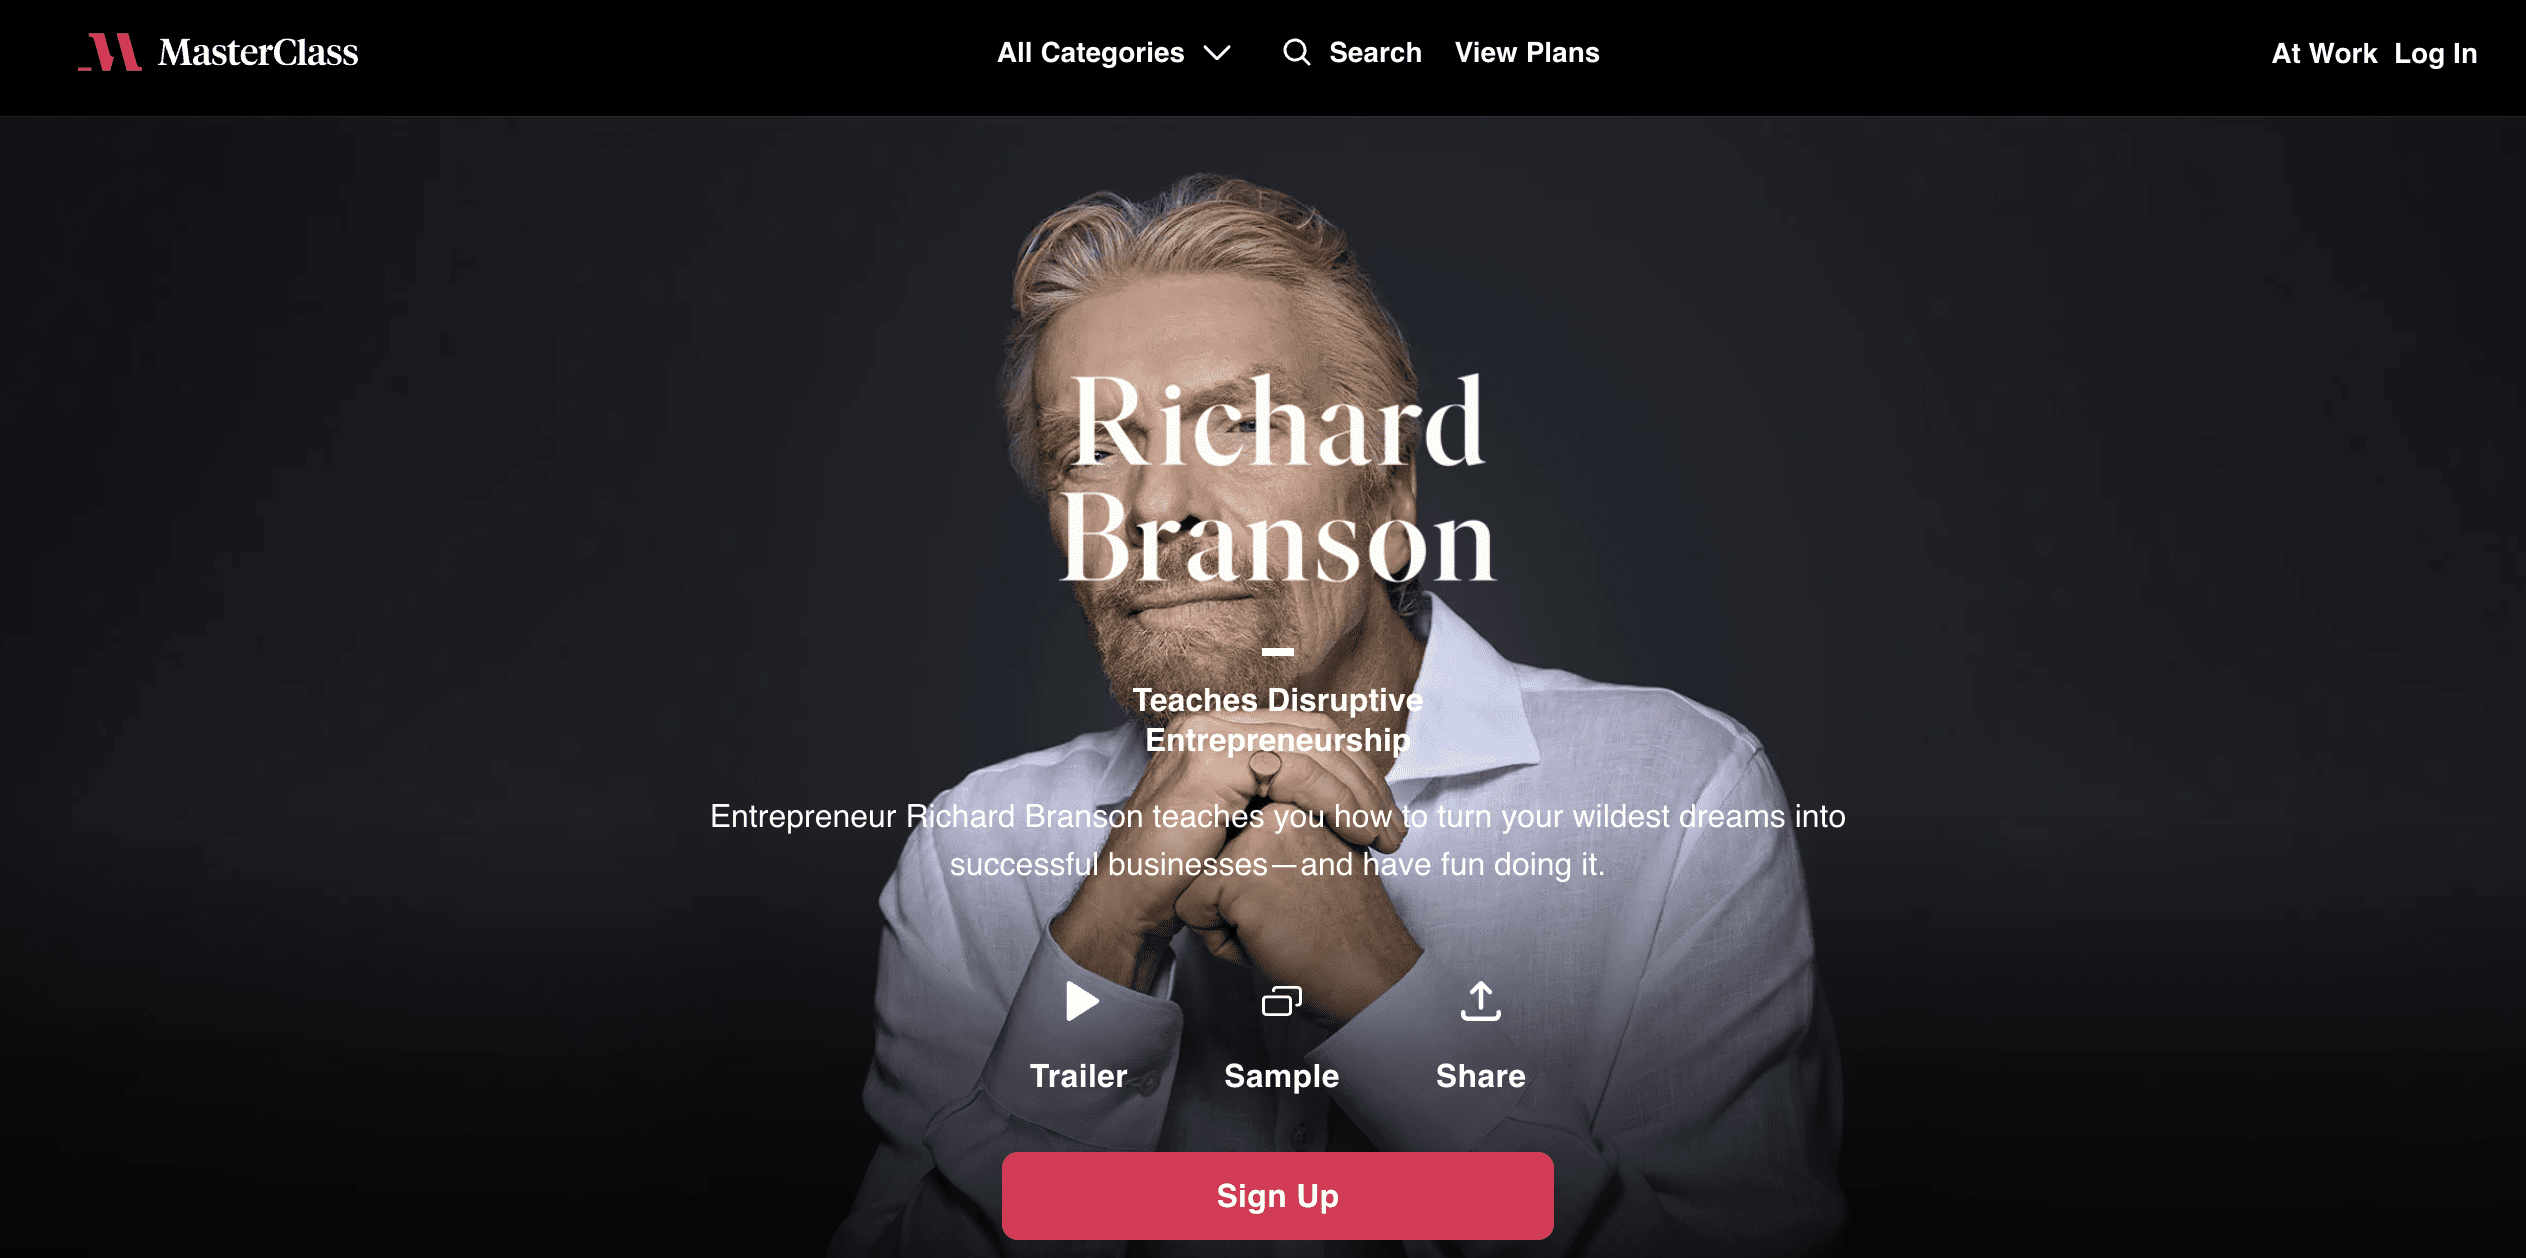 Richard Branson Masterclass review